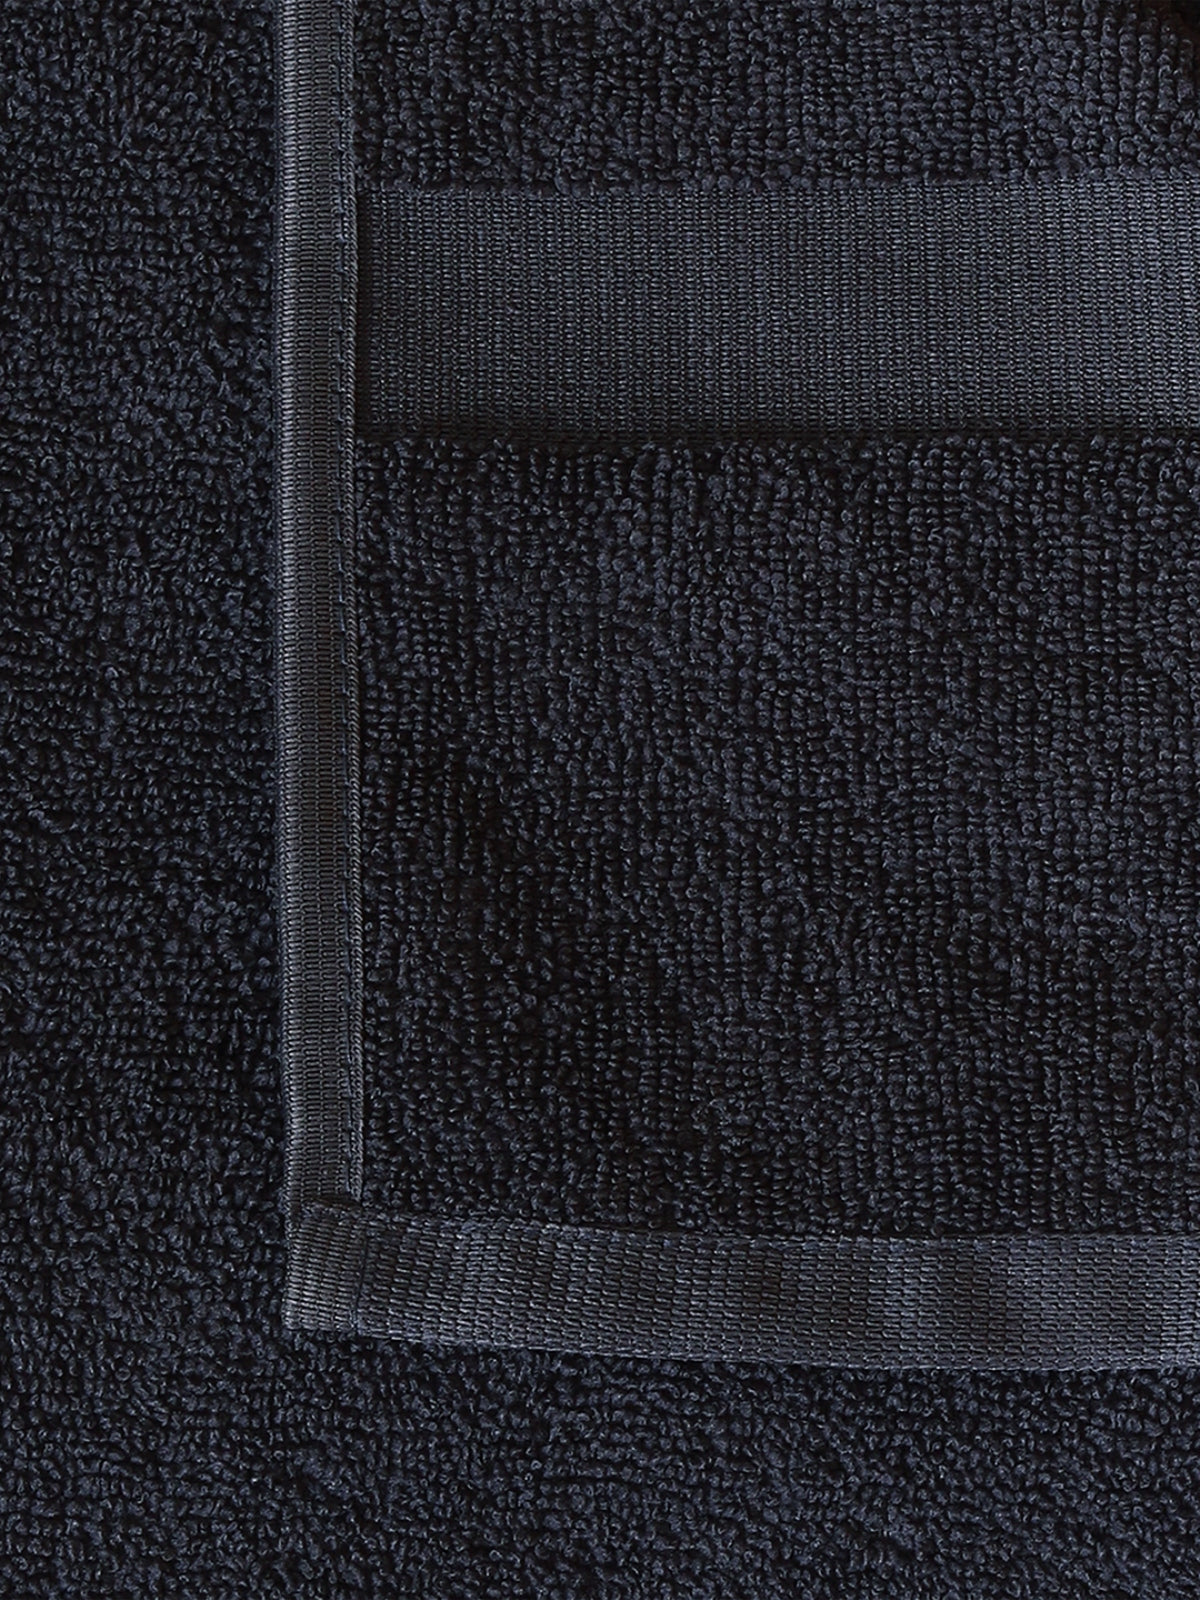 Set of 2 Grey Solid Microfiber Towels